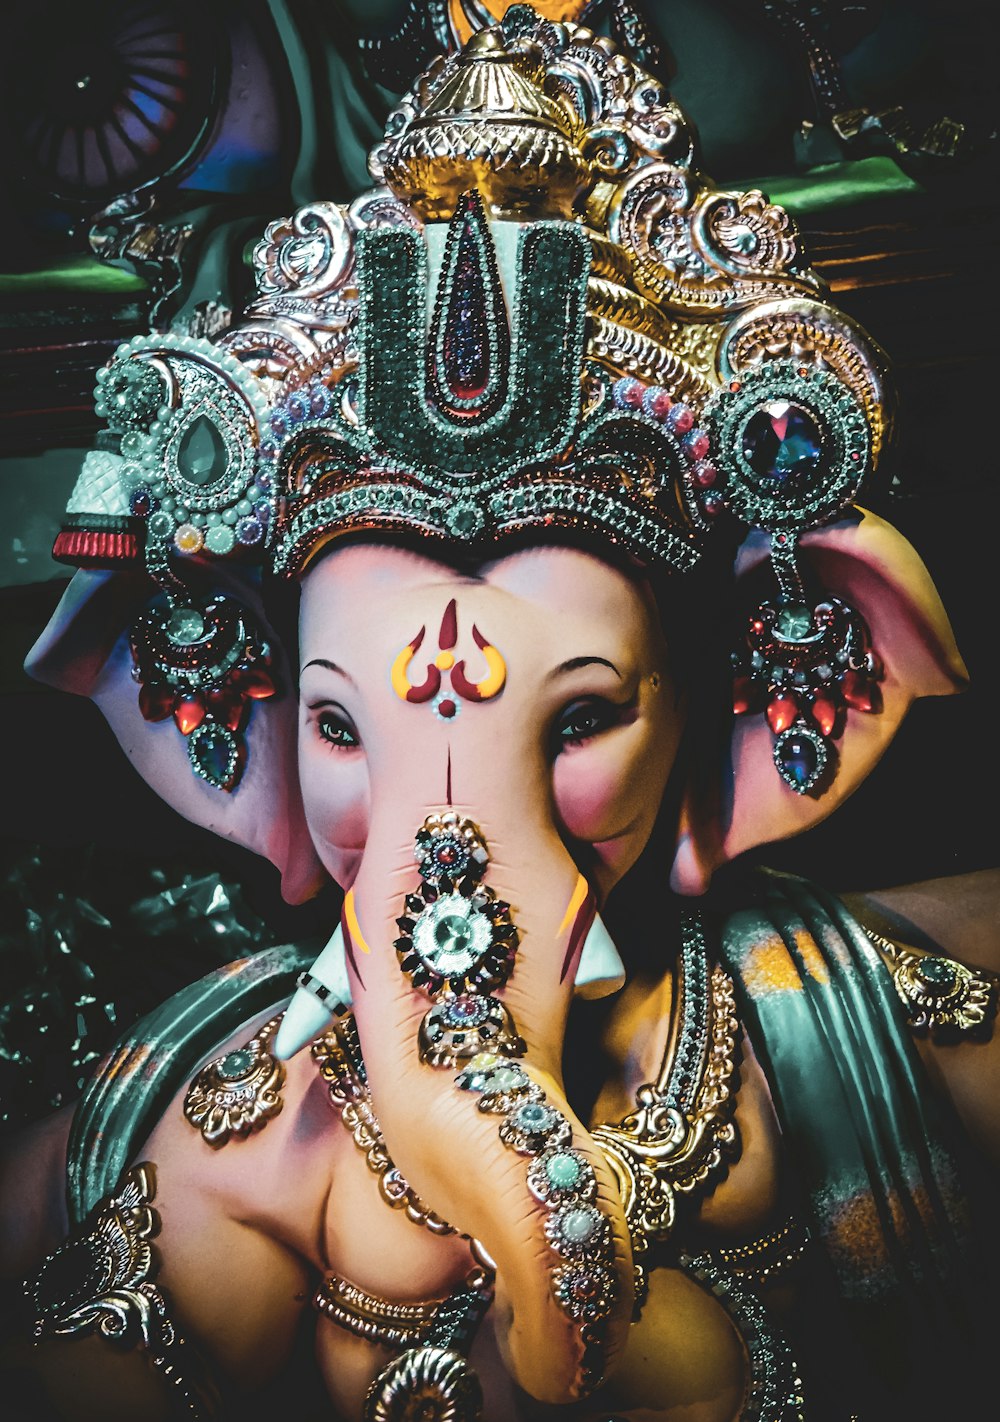 500+ Hindu God Images Free Download | Download Free Pictures On Unsplash